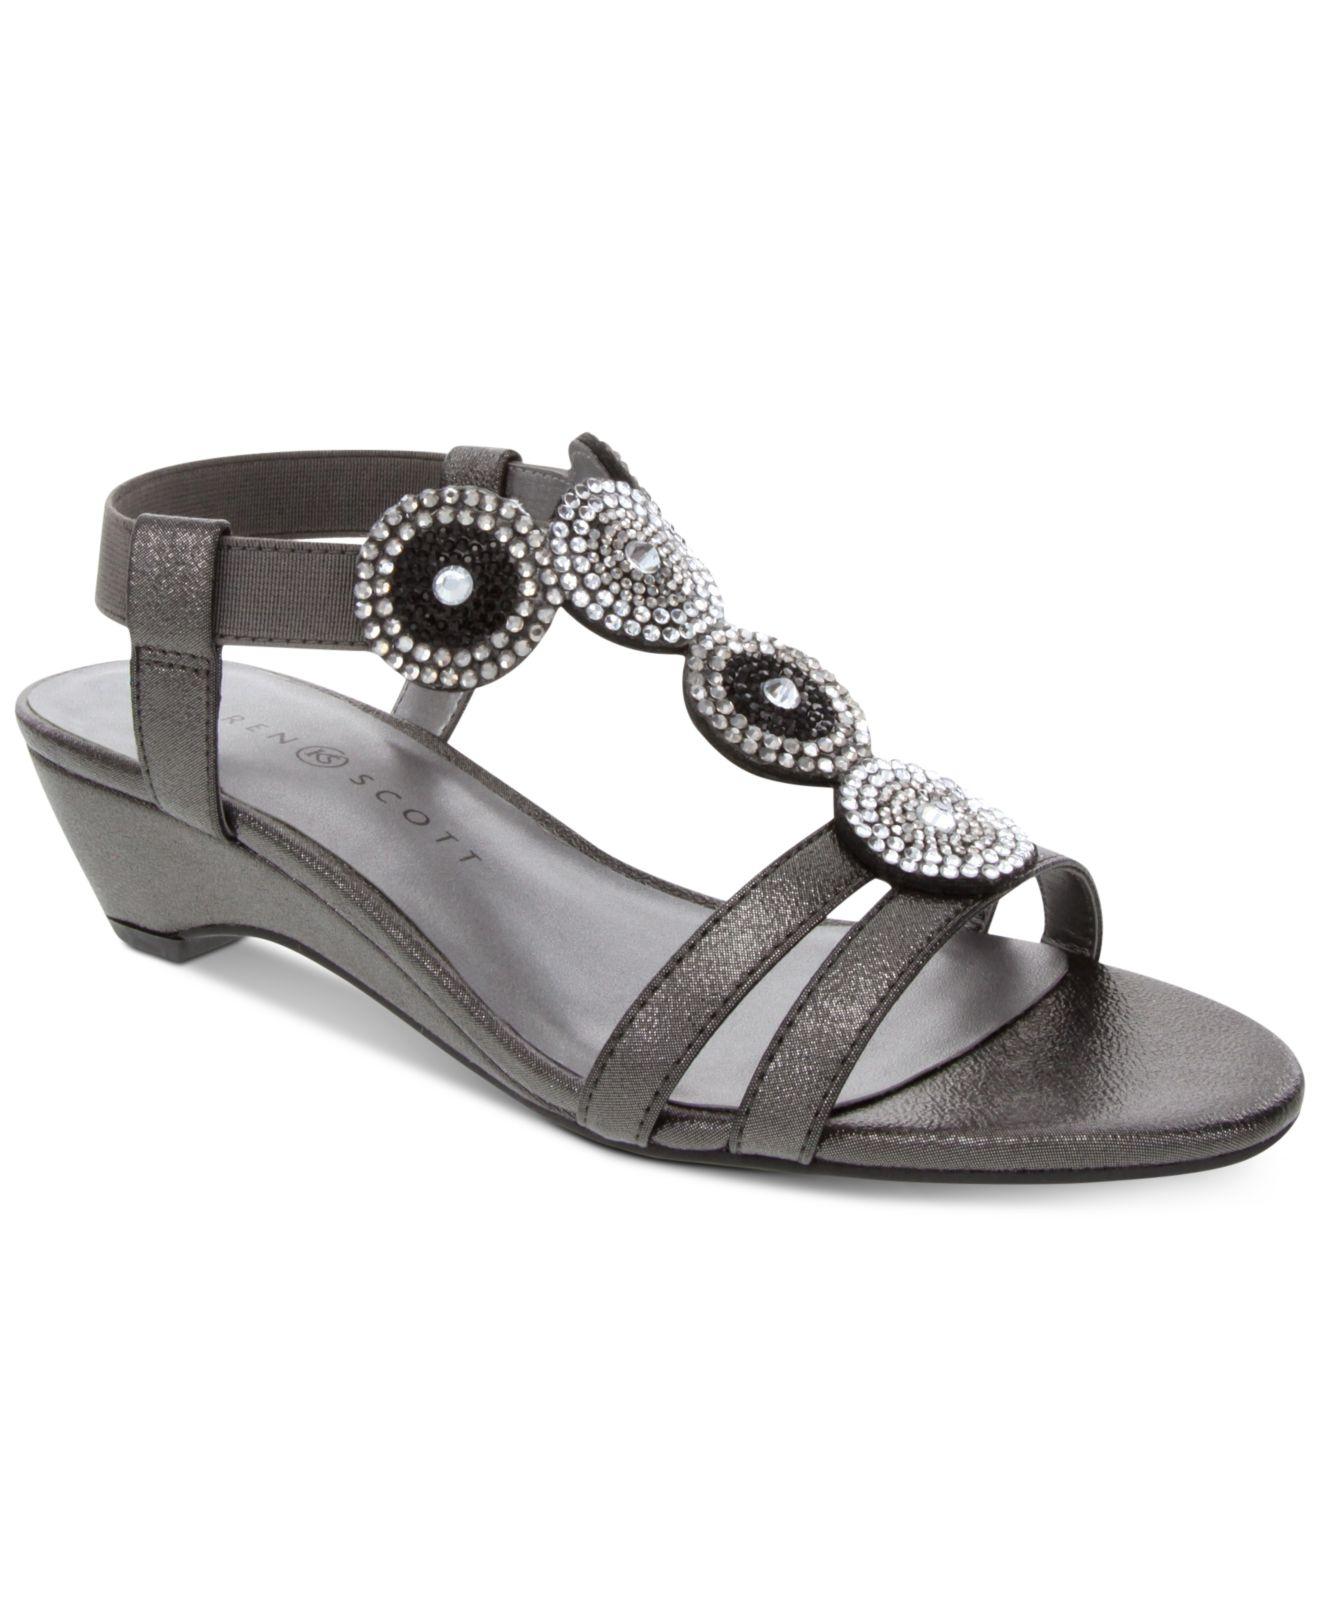 Karen Scott Catrinaa Wedge Sandals, Created For Macy's - Lyst